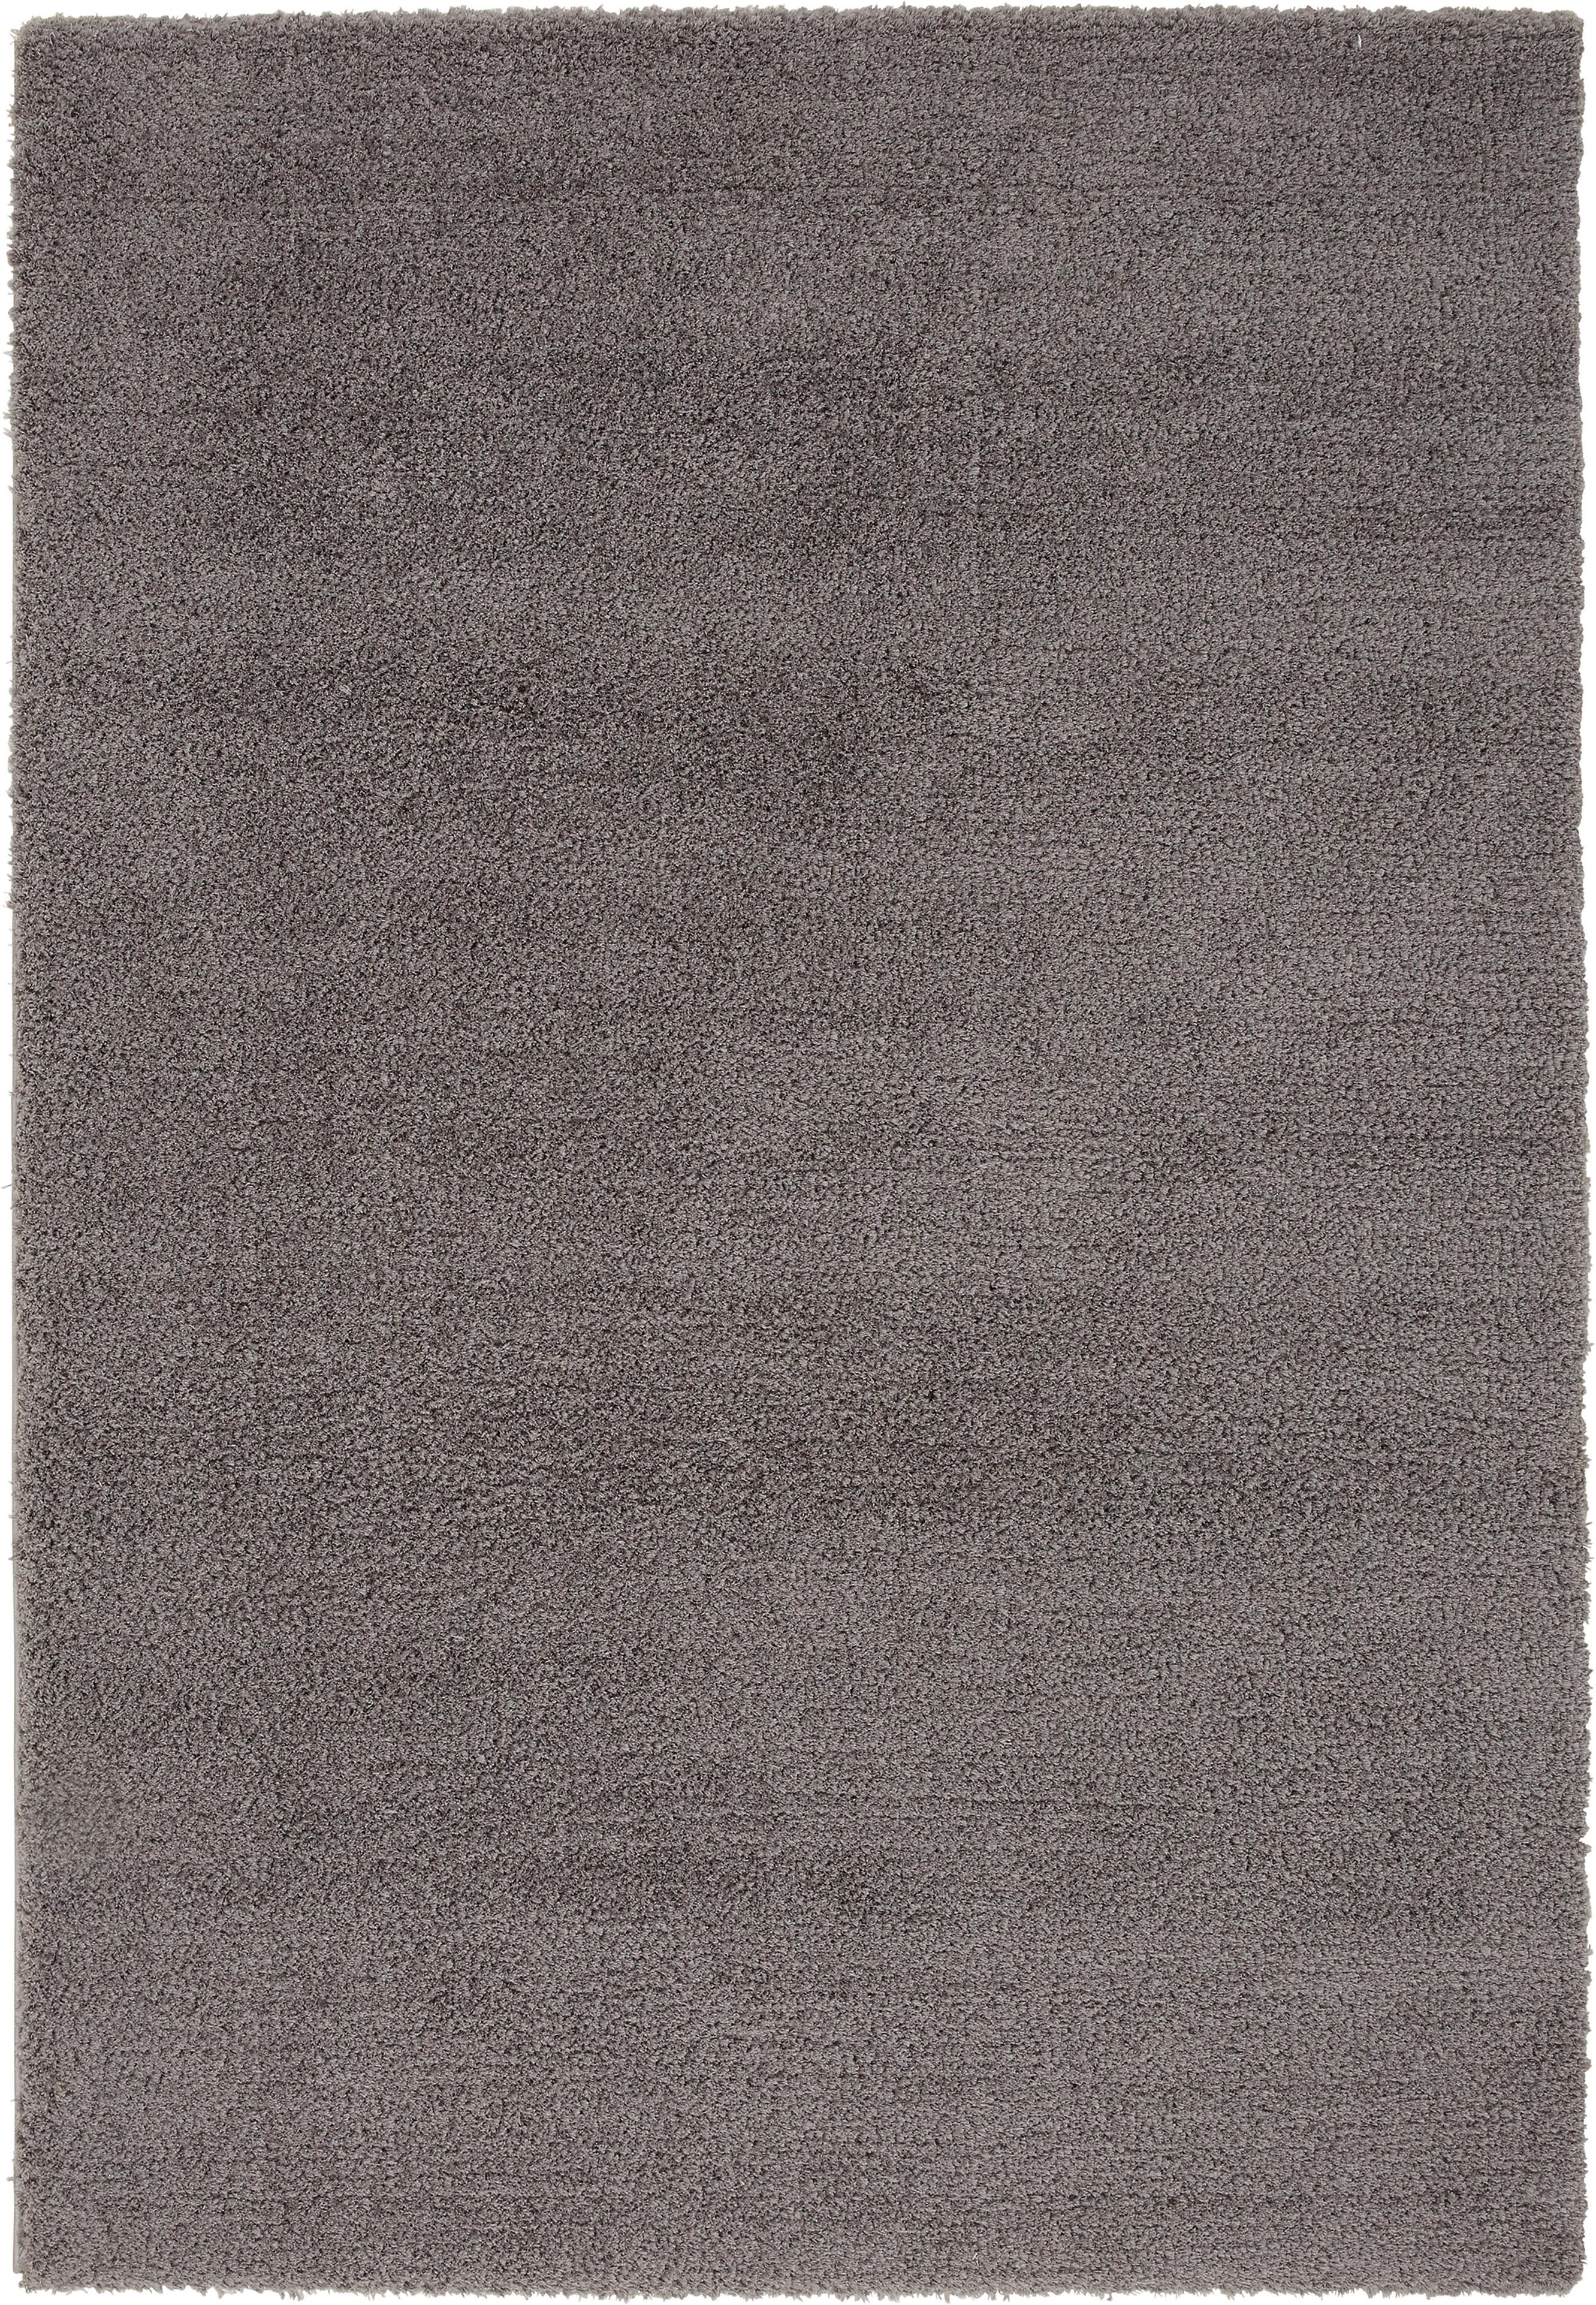 Shaggy Stefan in Dunkelgrau ca. 80x150cm - Dunkelgrau, MODERN, Textil (80/150cm) - Modern Living